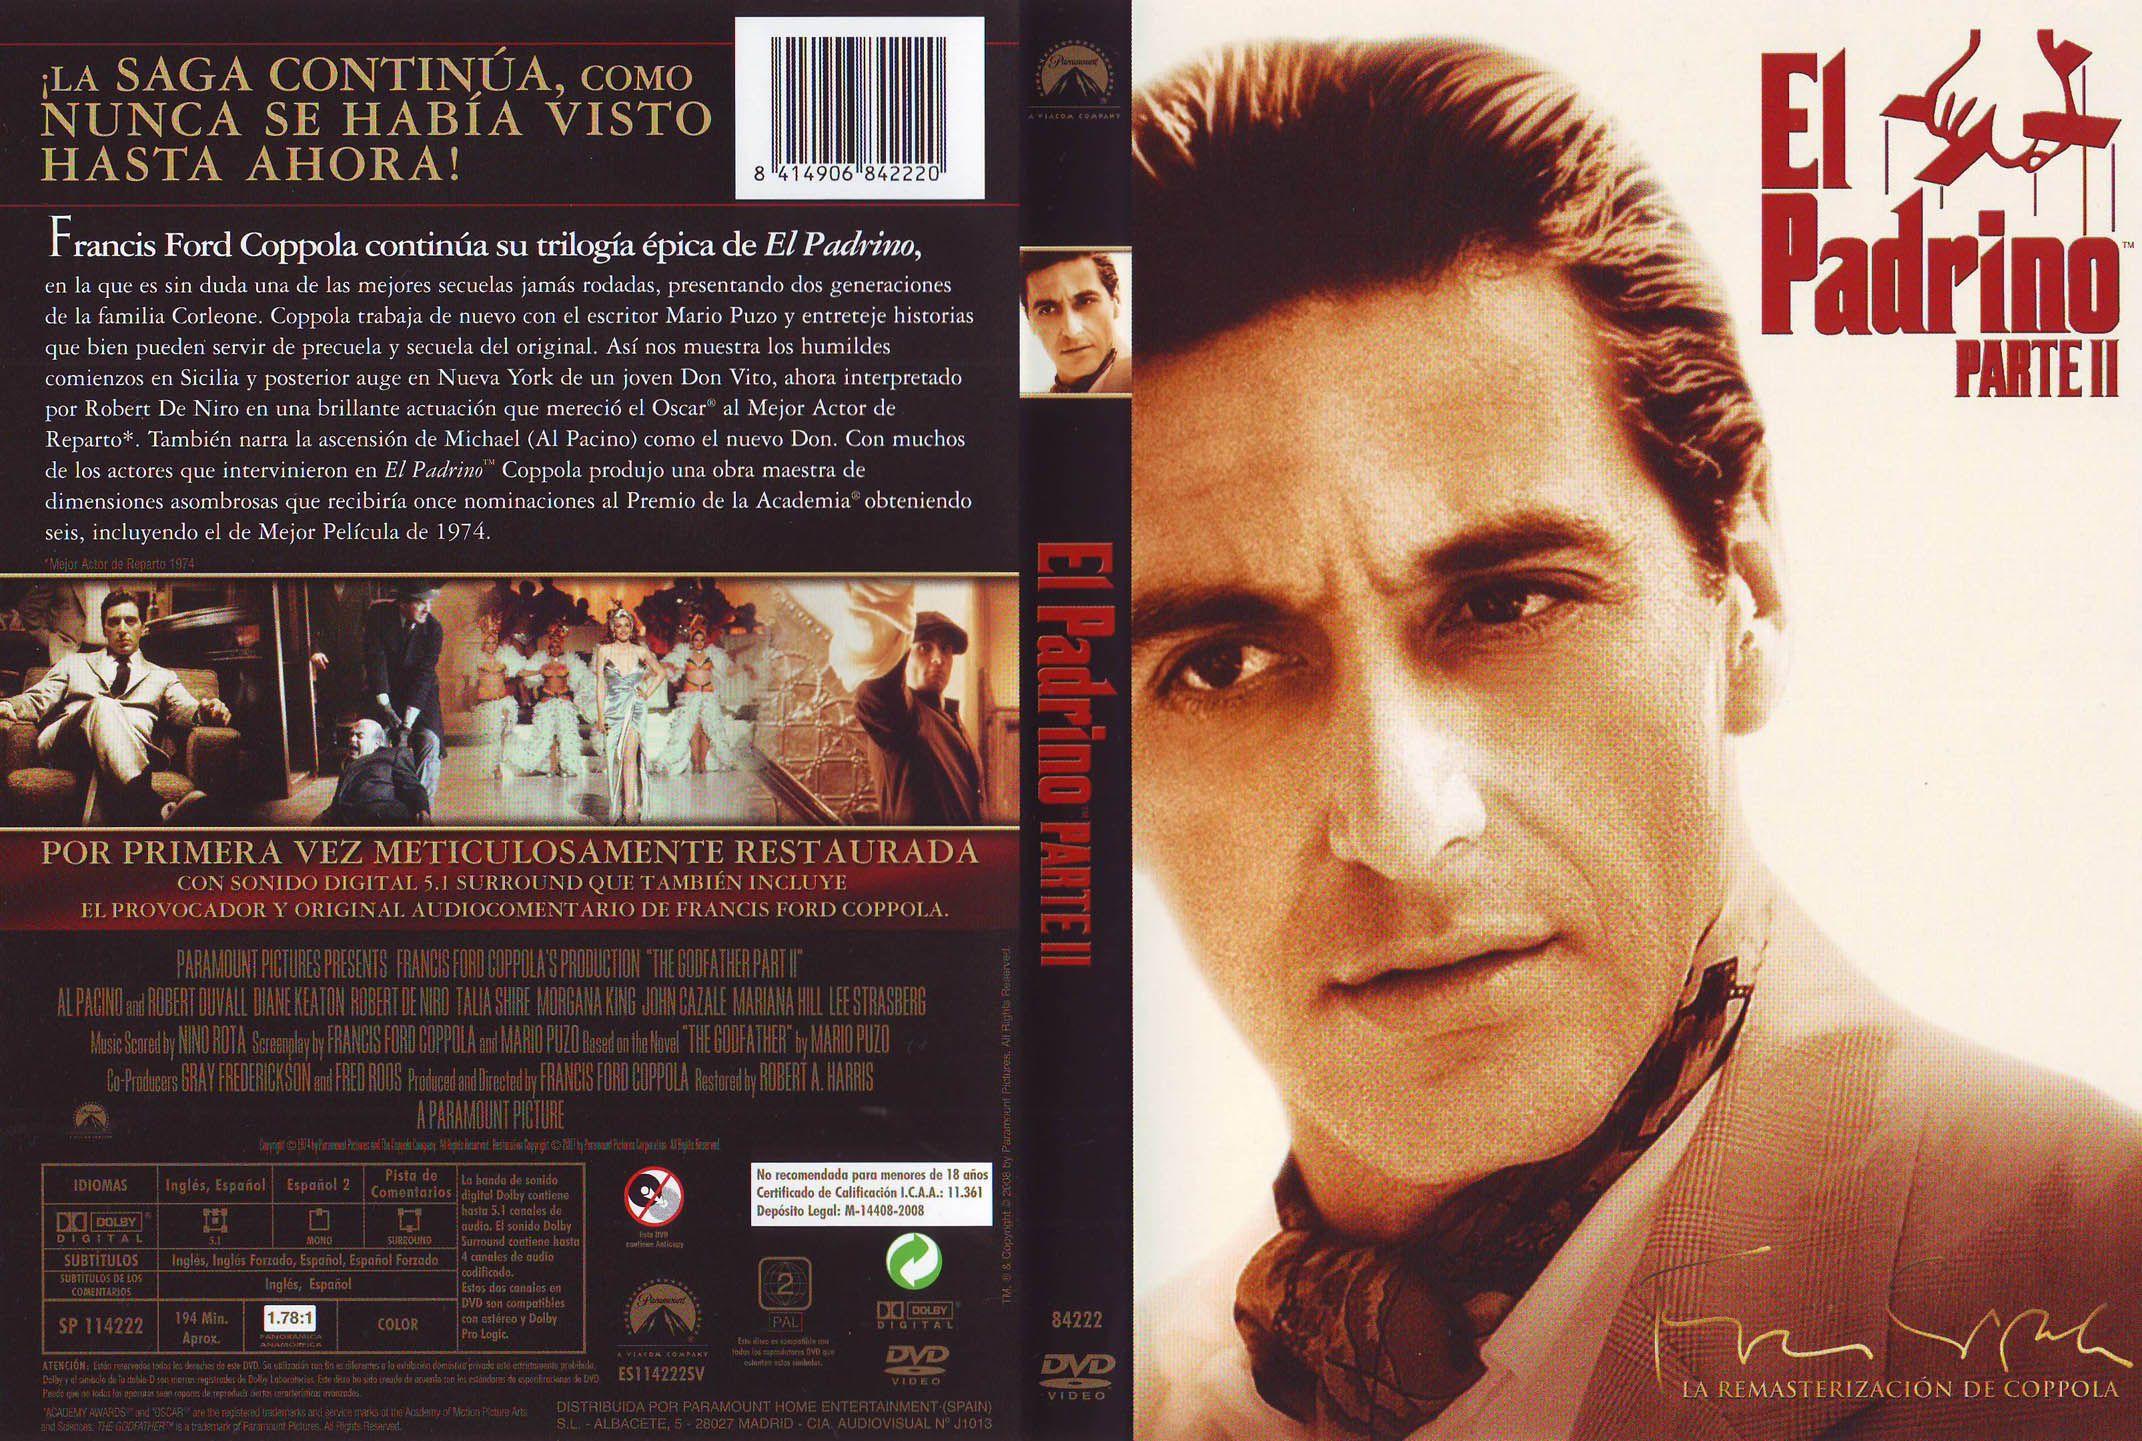 DVD EL PADRINO PARTE II Z/4 DISNEY